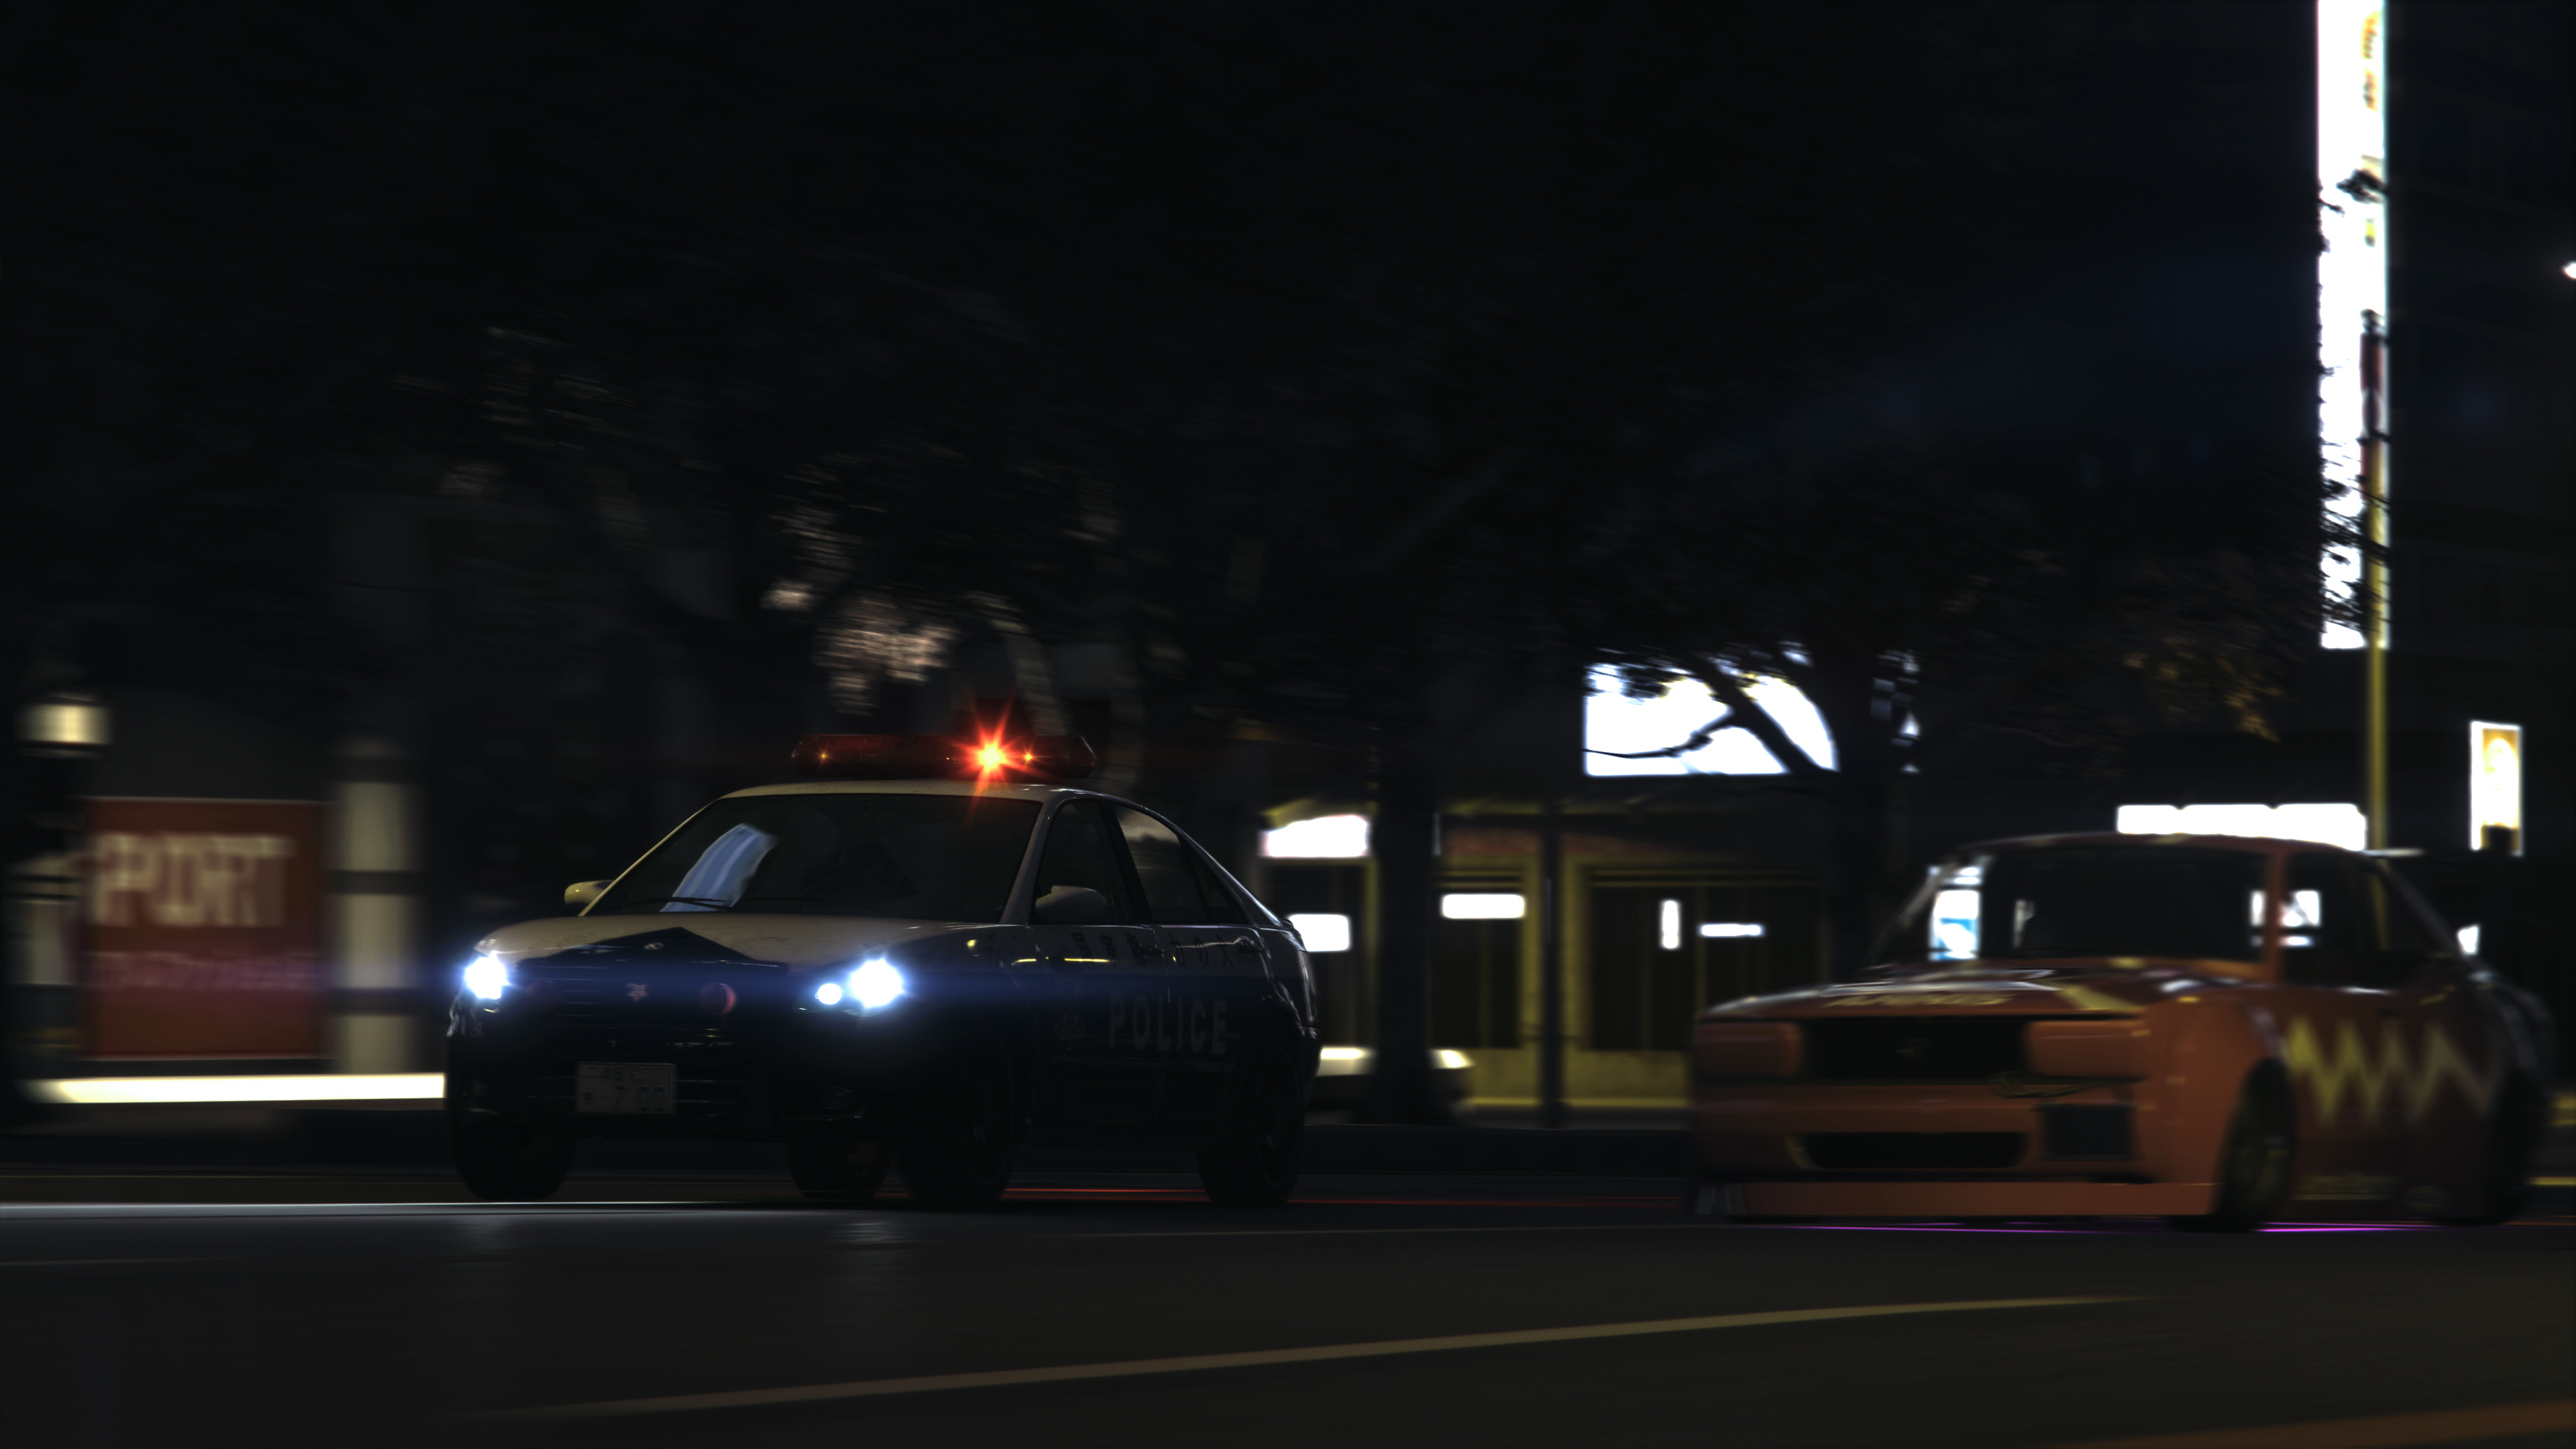 Bravado Feroci Policia for GTA 5